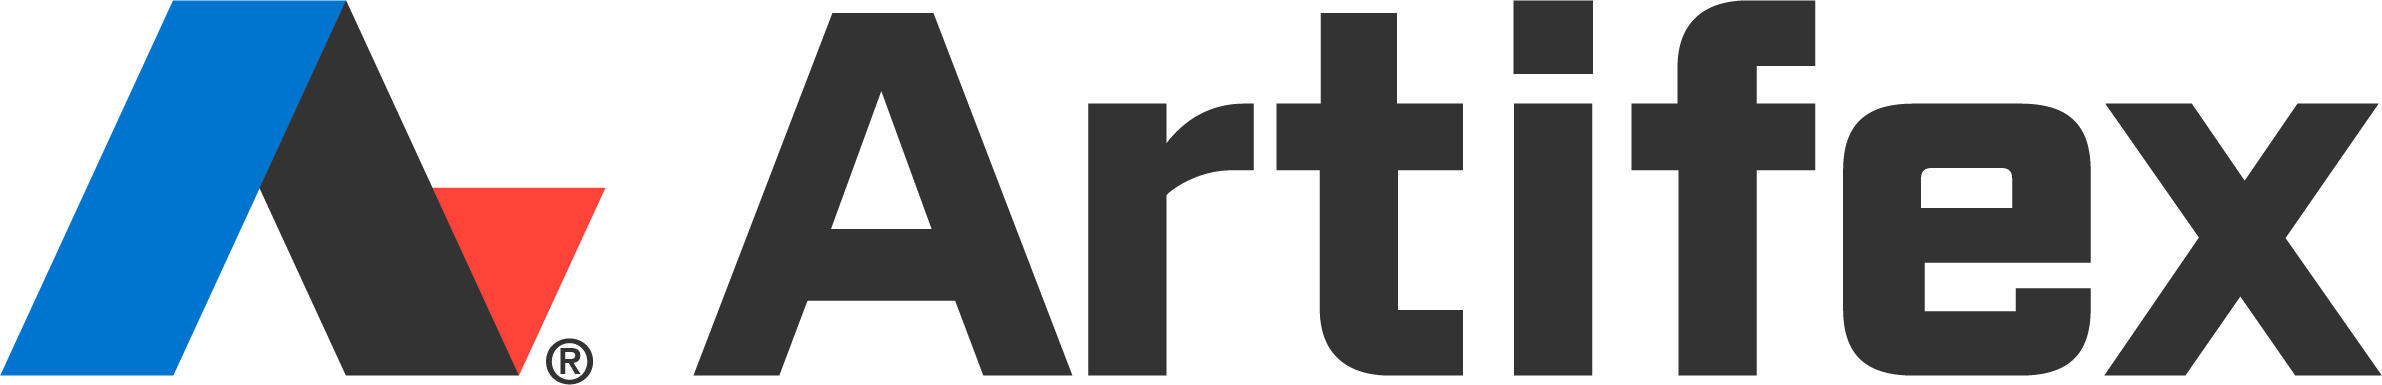 artifex_logo